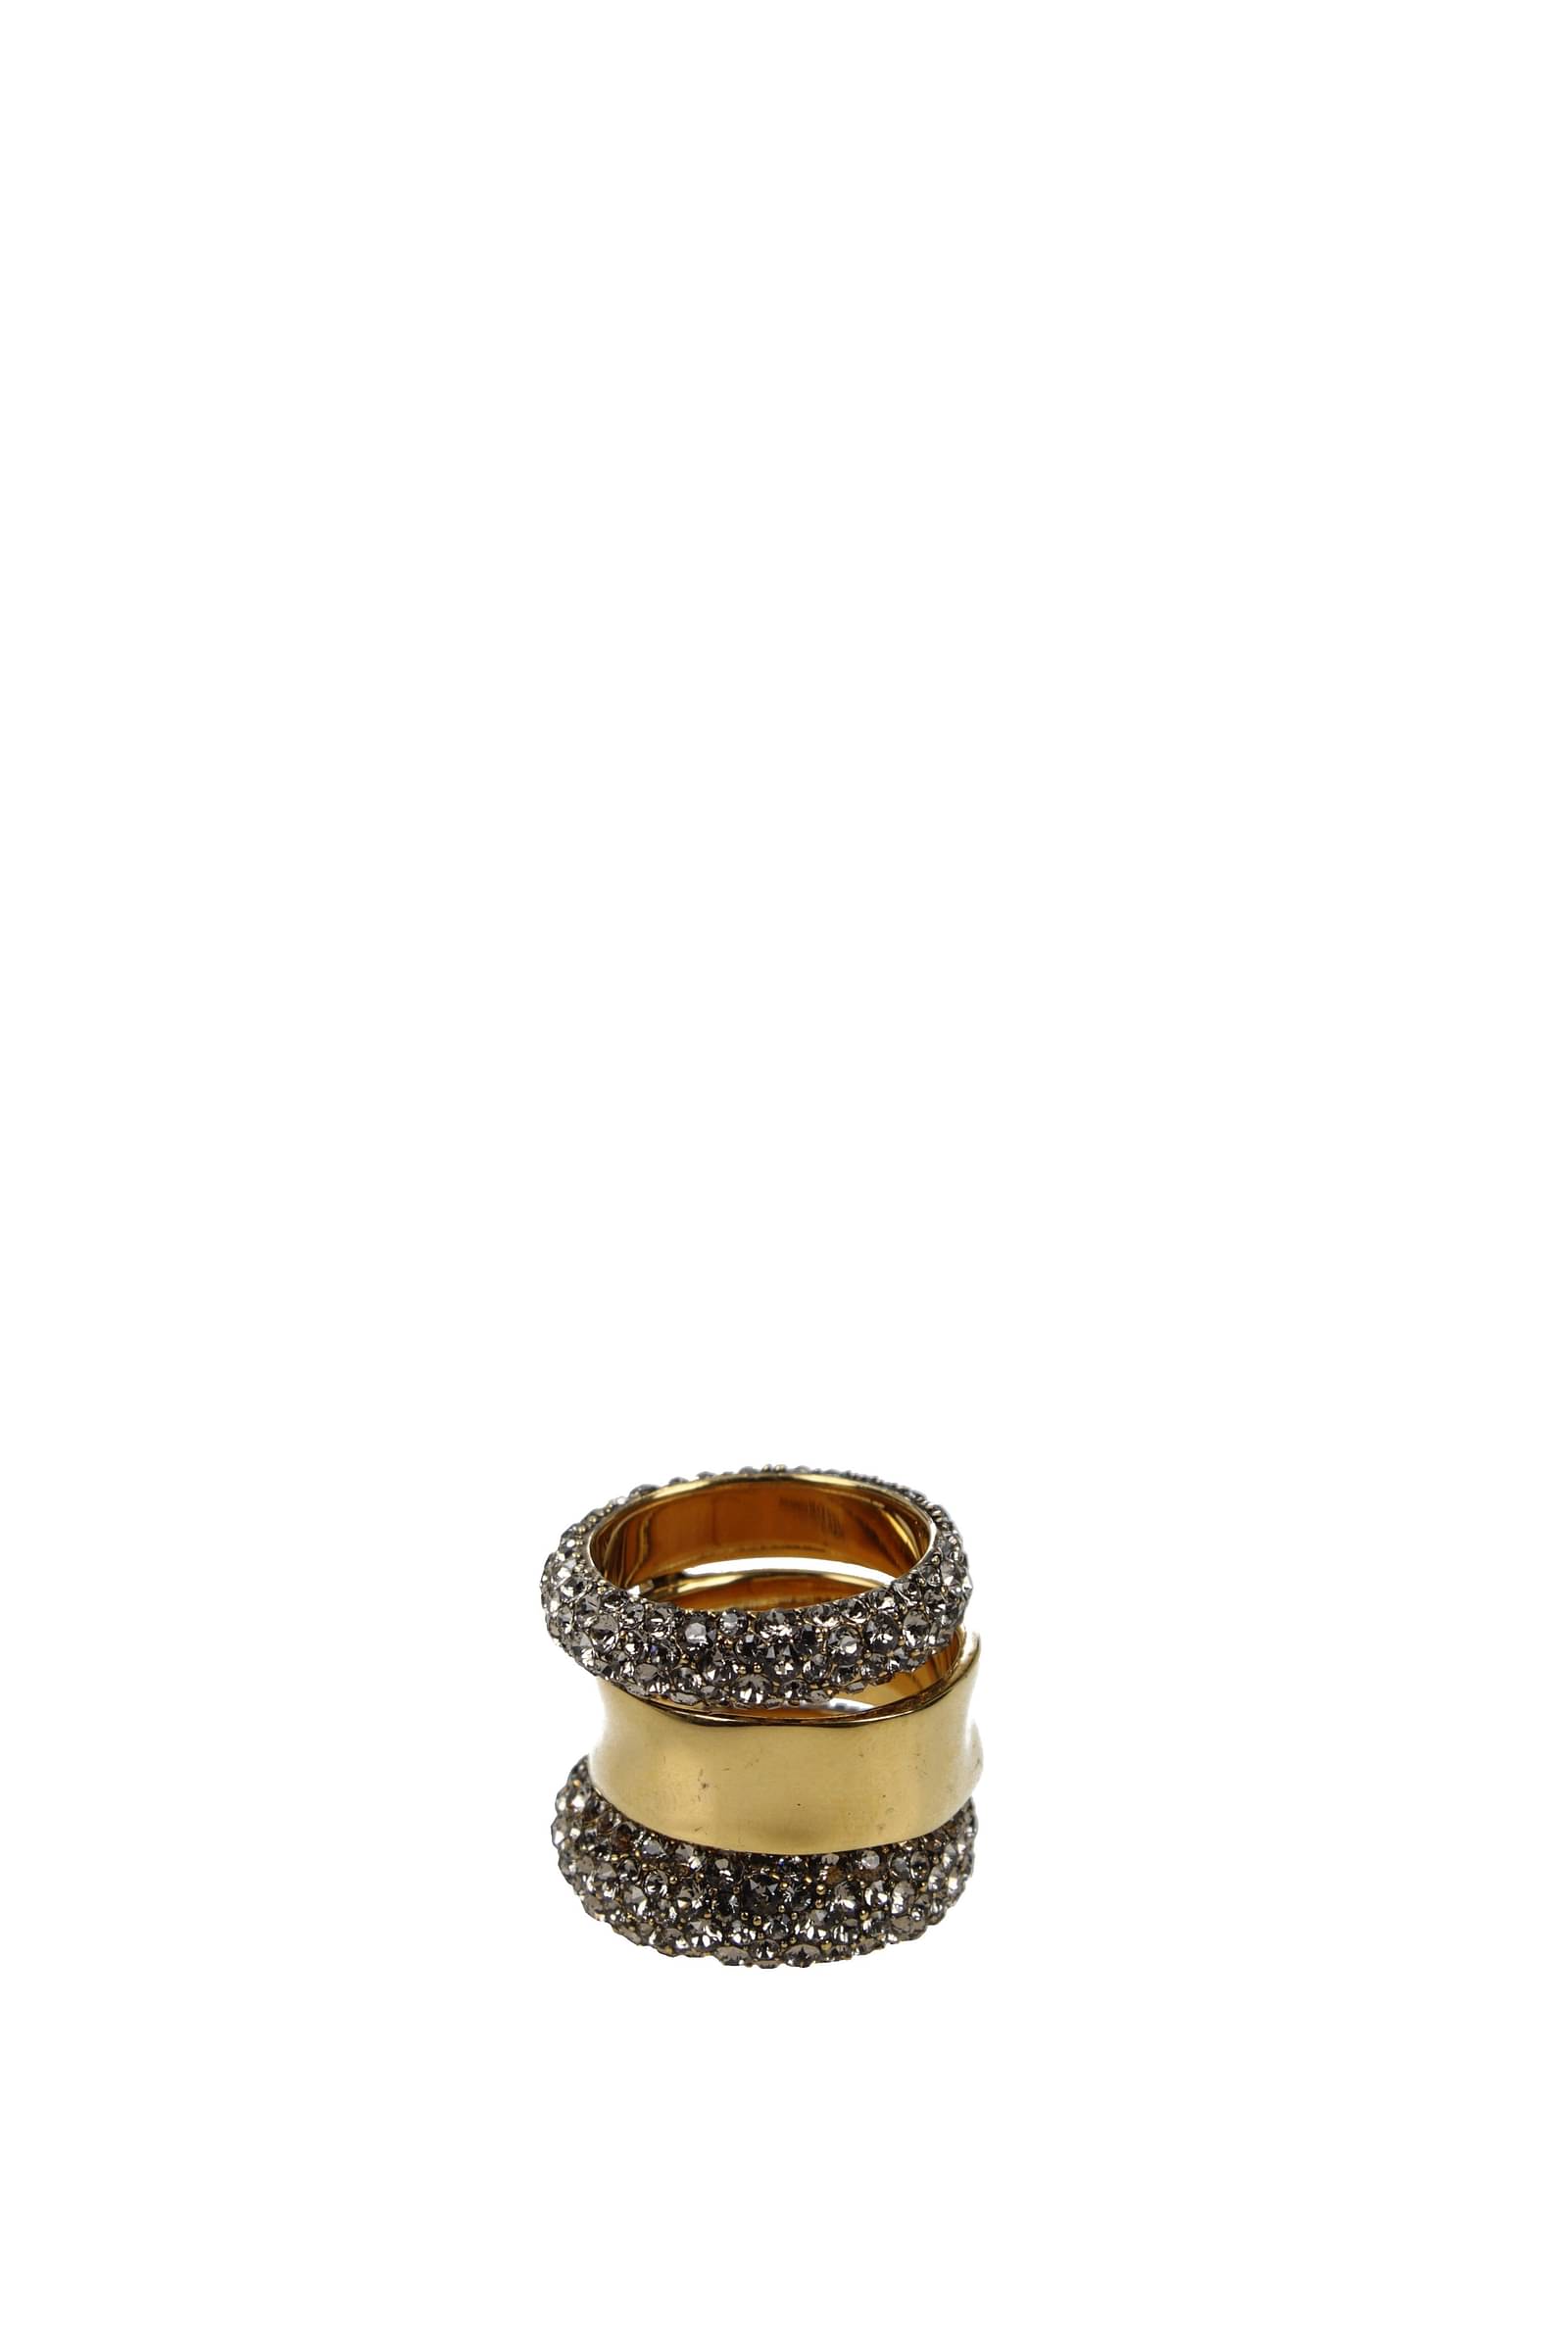 Cosmos Ring at Rs 500/piece | पीतल की अंगूठी in New Delhi | ID: 14296184873